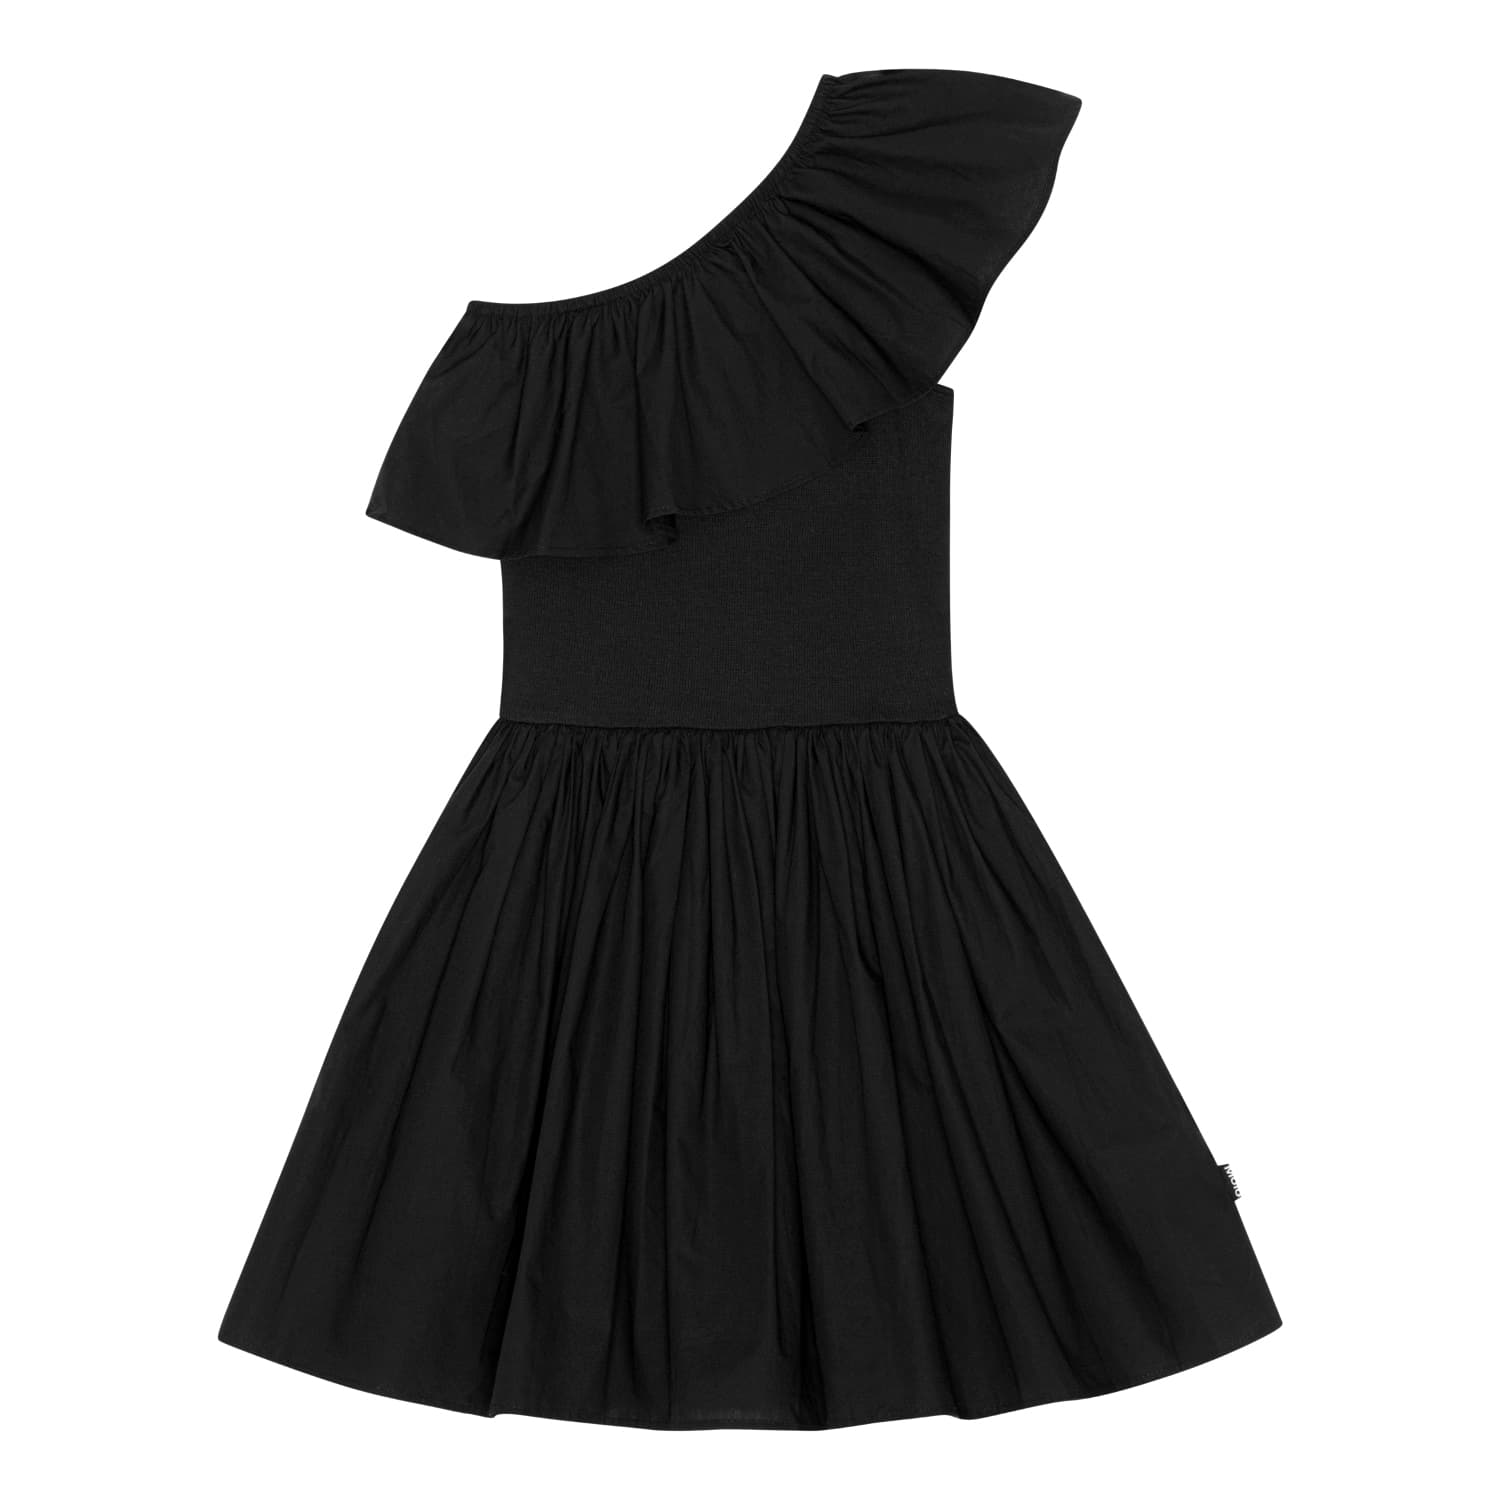 Chloey Dress (Black)